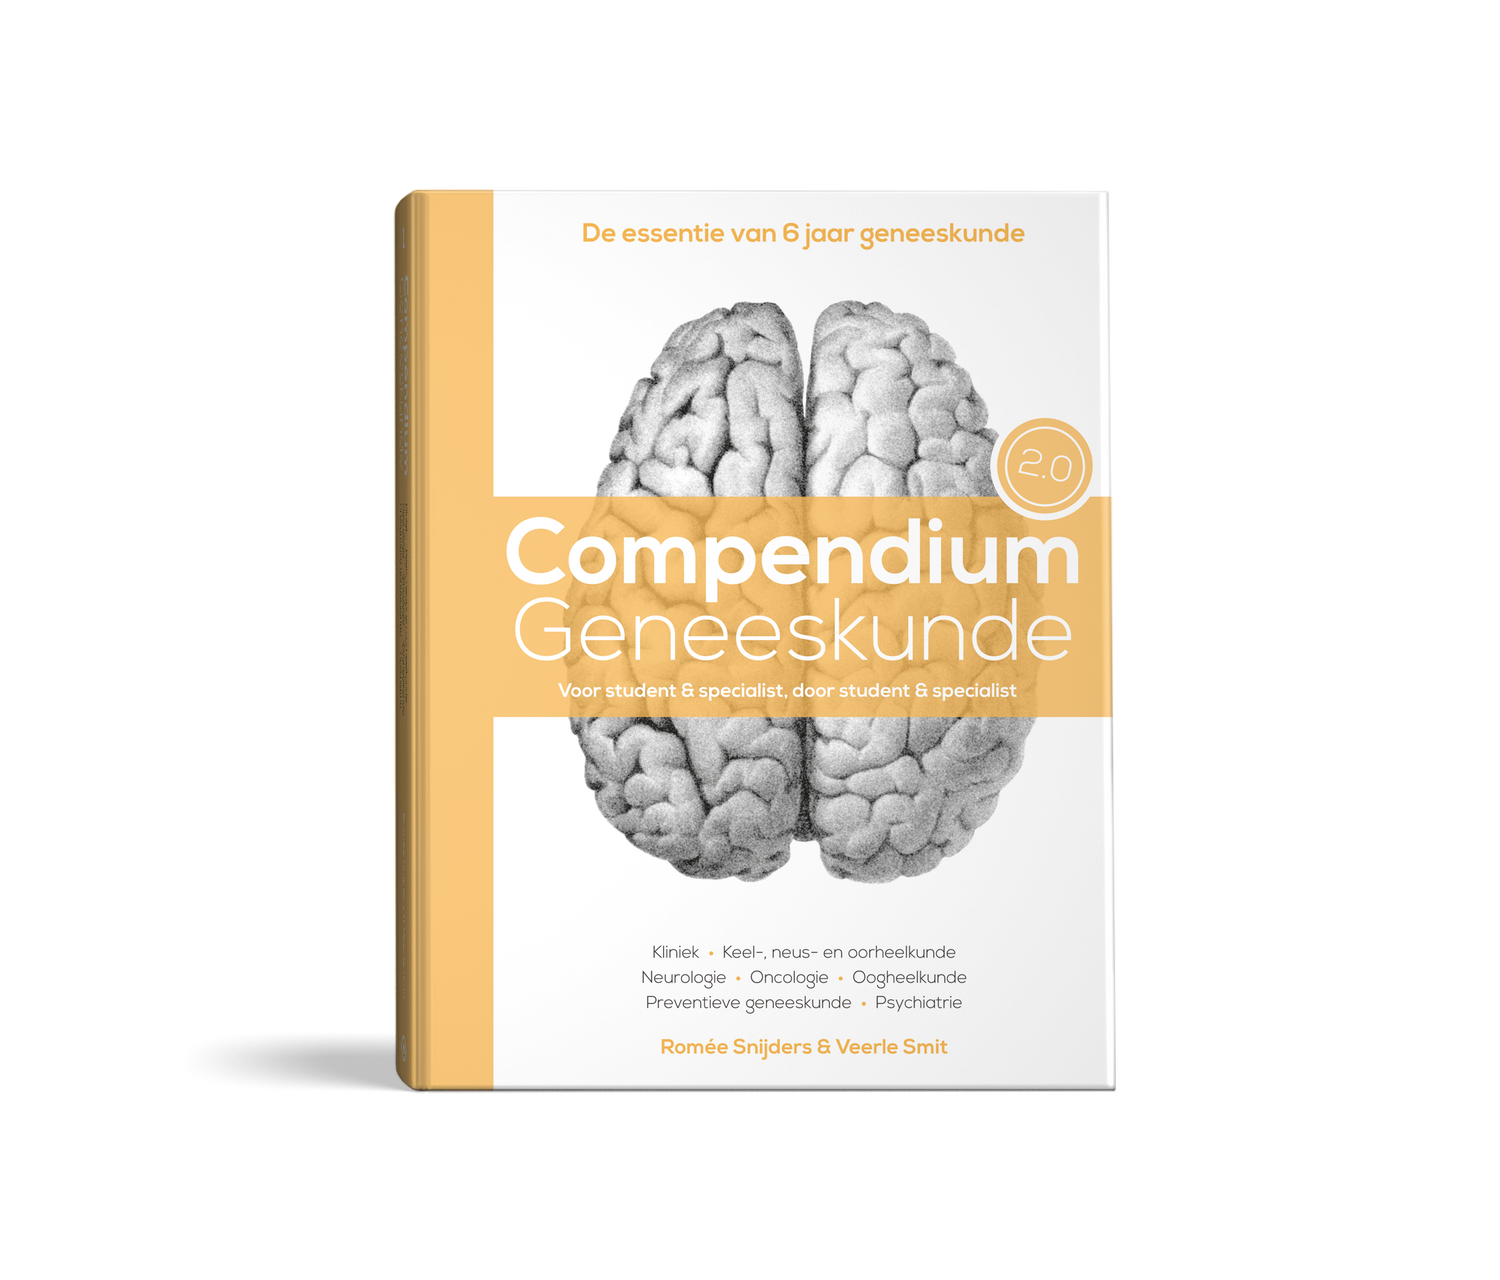 Neurologie compendium geneeskunde boekenreeks